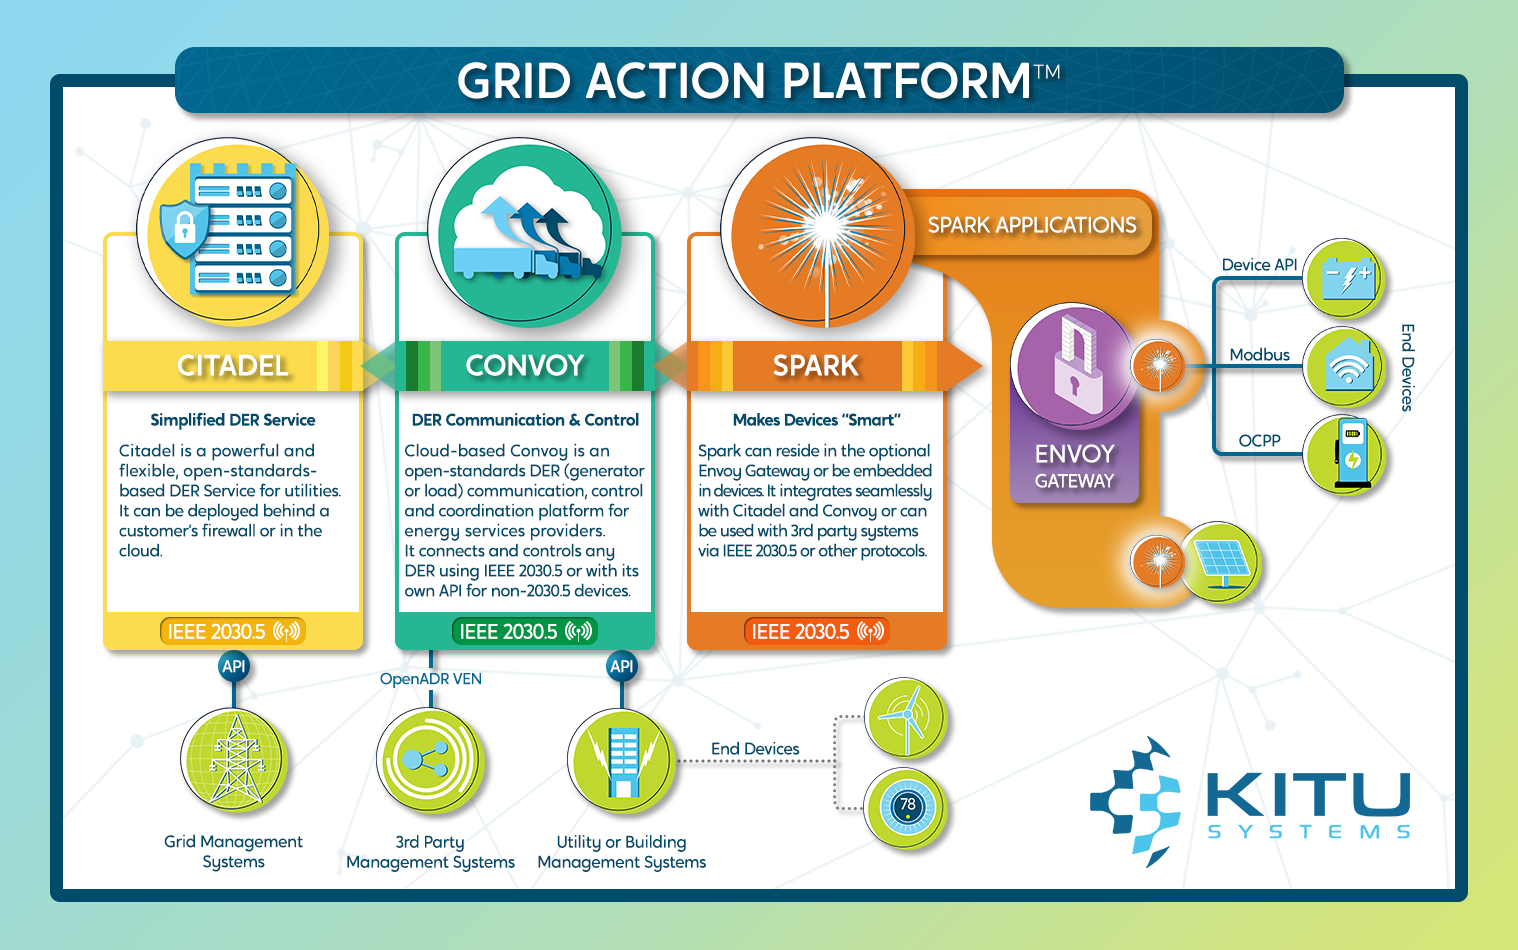 Kitu Systems’ Grid Action Platform™ Solutions